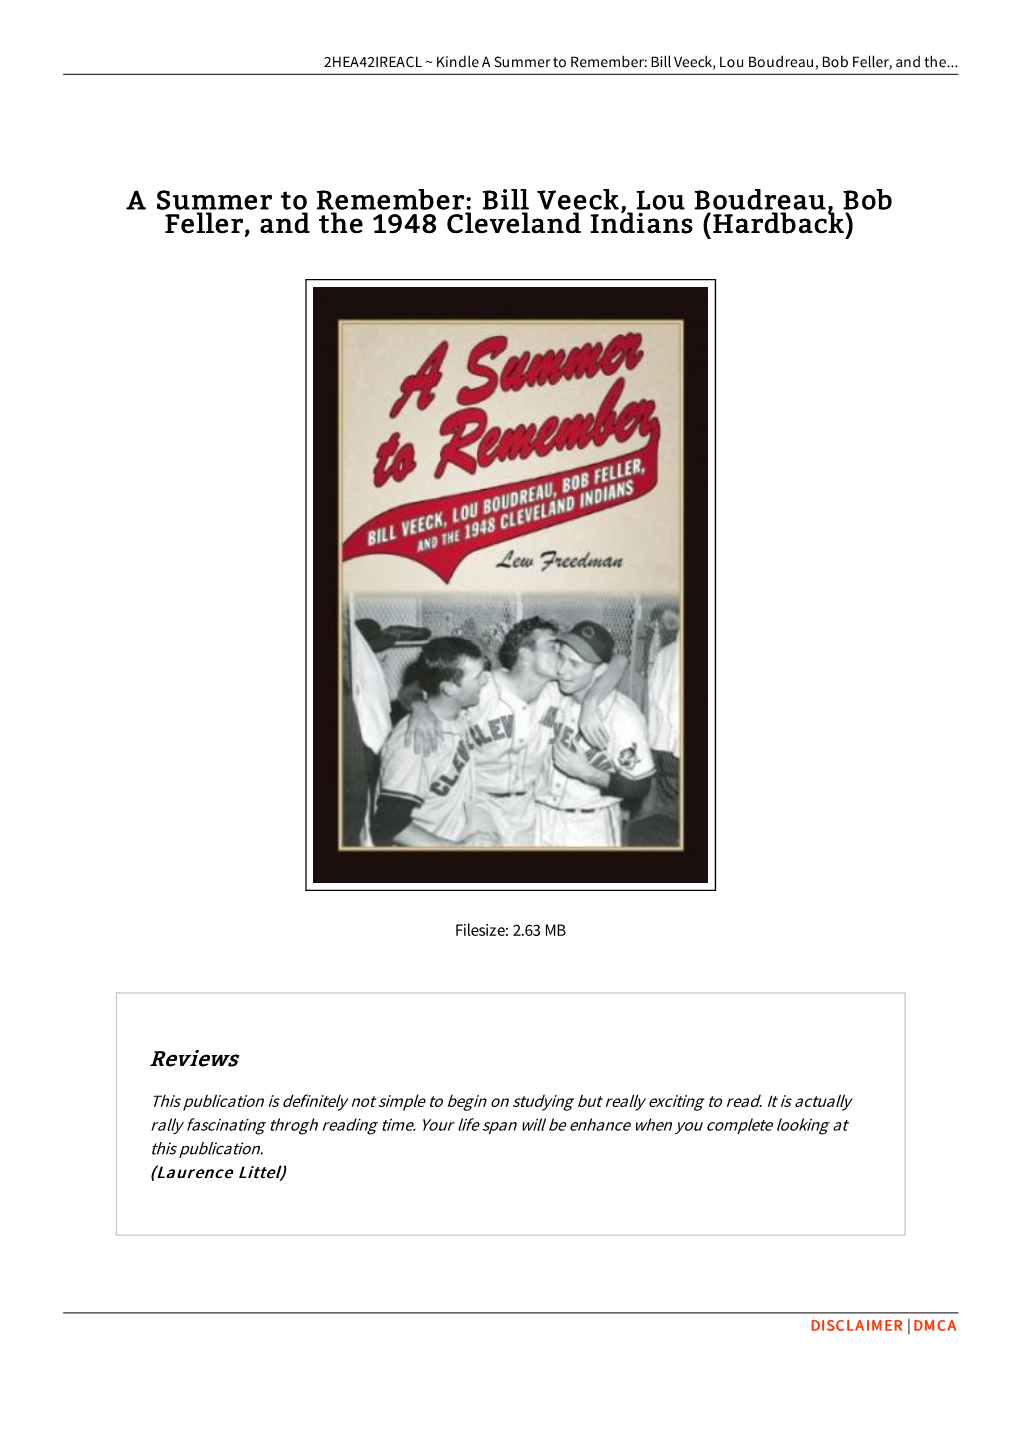 Bill Veeck, Lou Boudreau, Bob Feller, and the 1948 Cleveland Indians (Hardback)